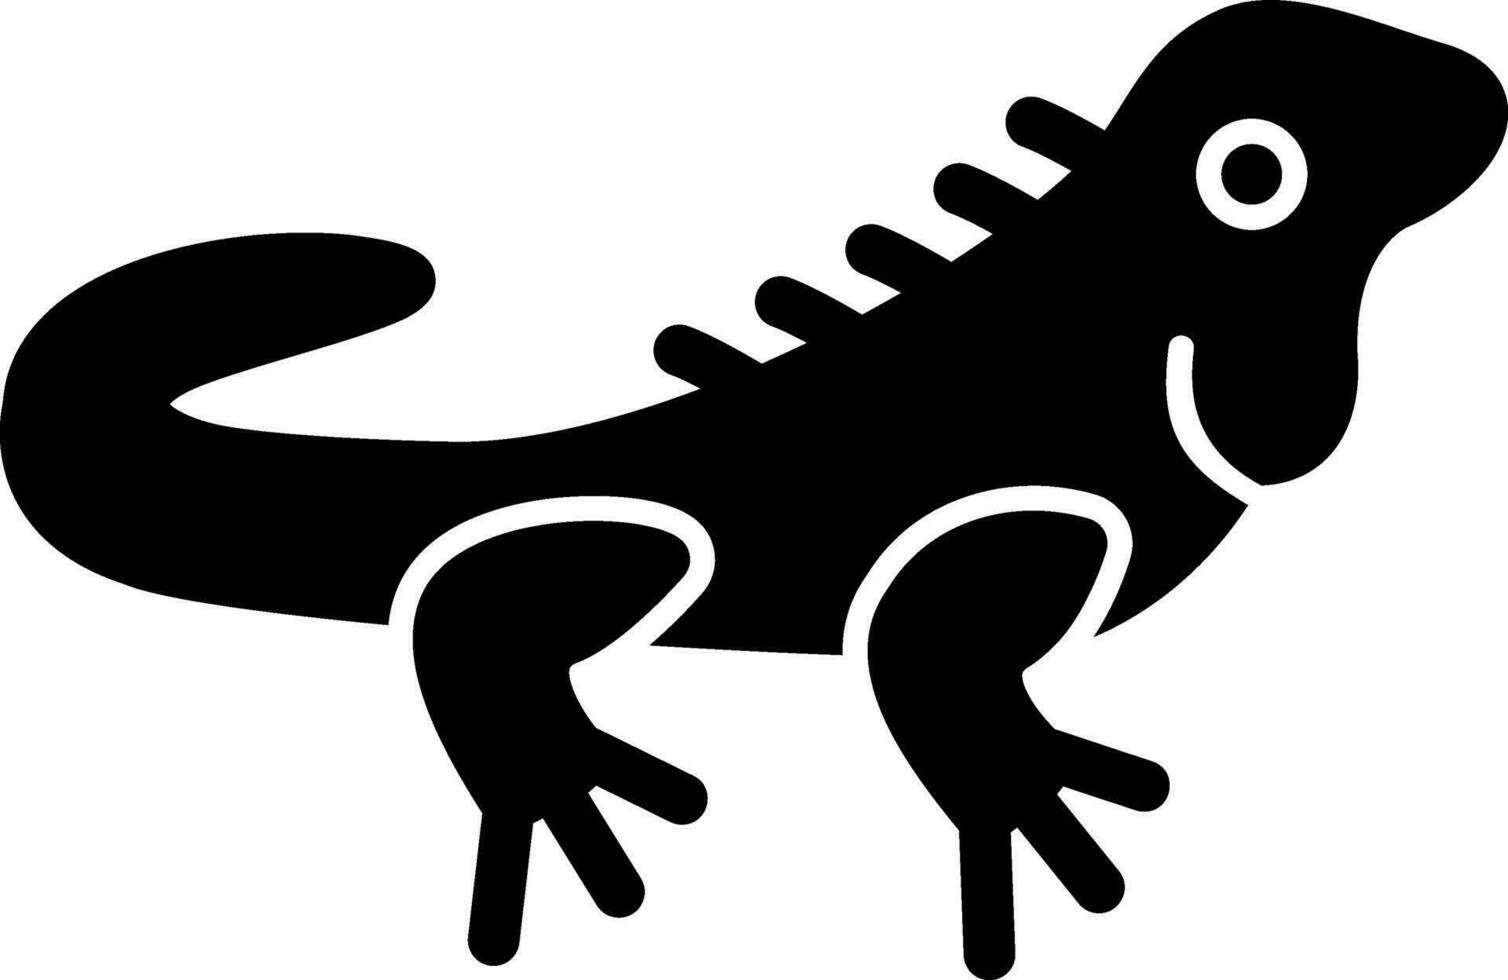 iguana vettore icona design